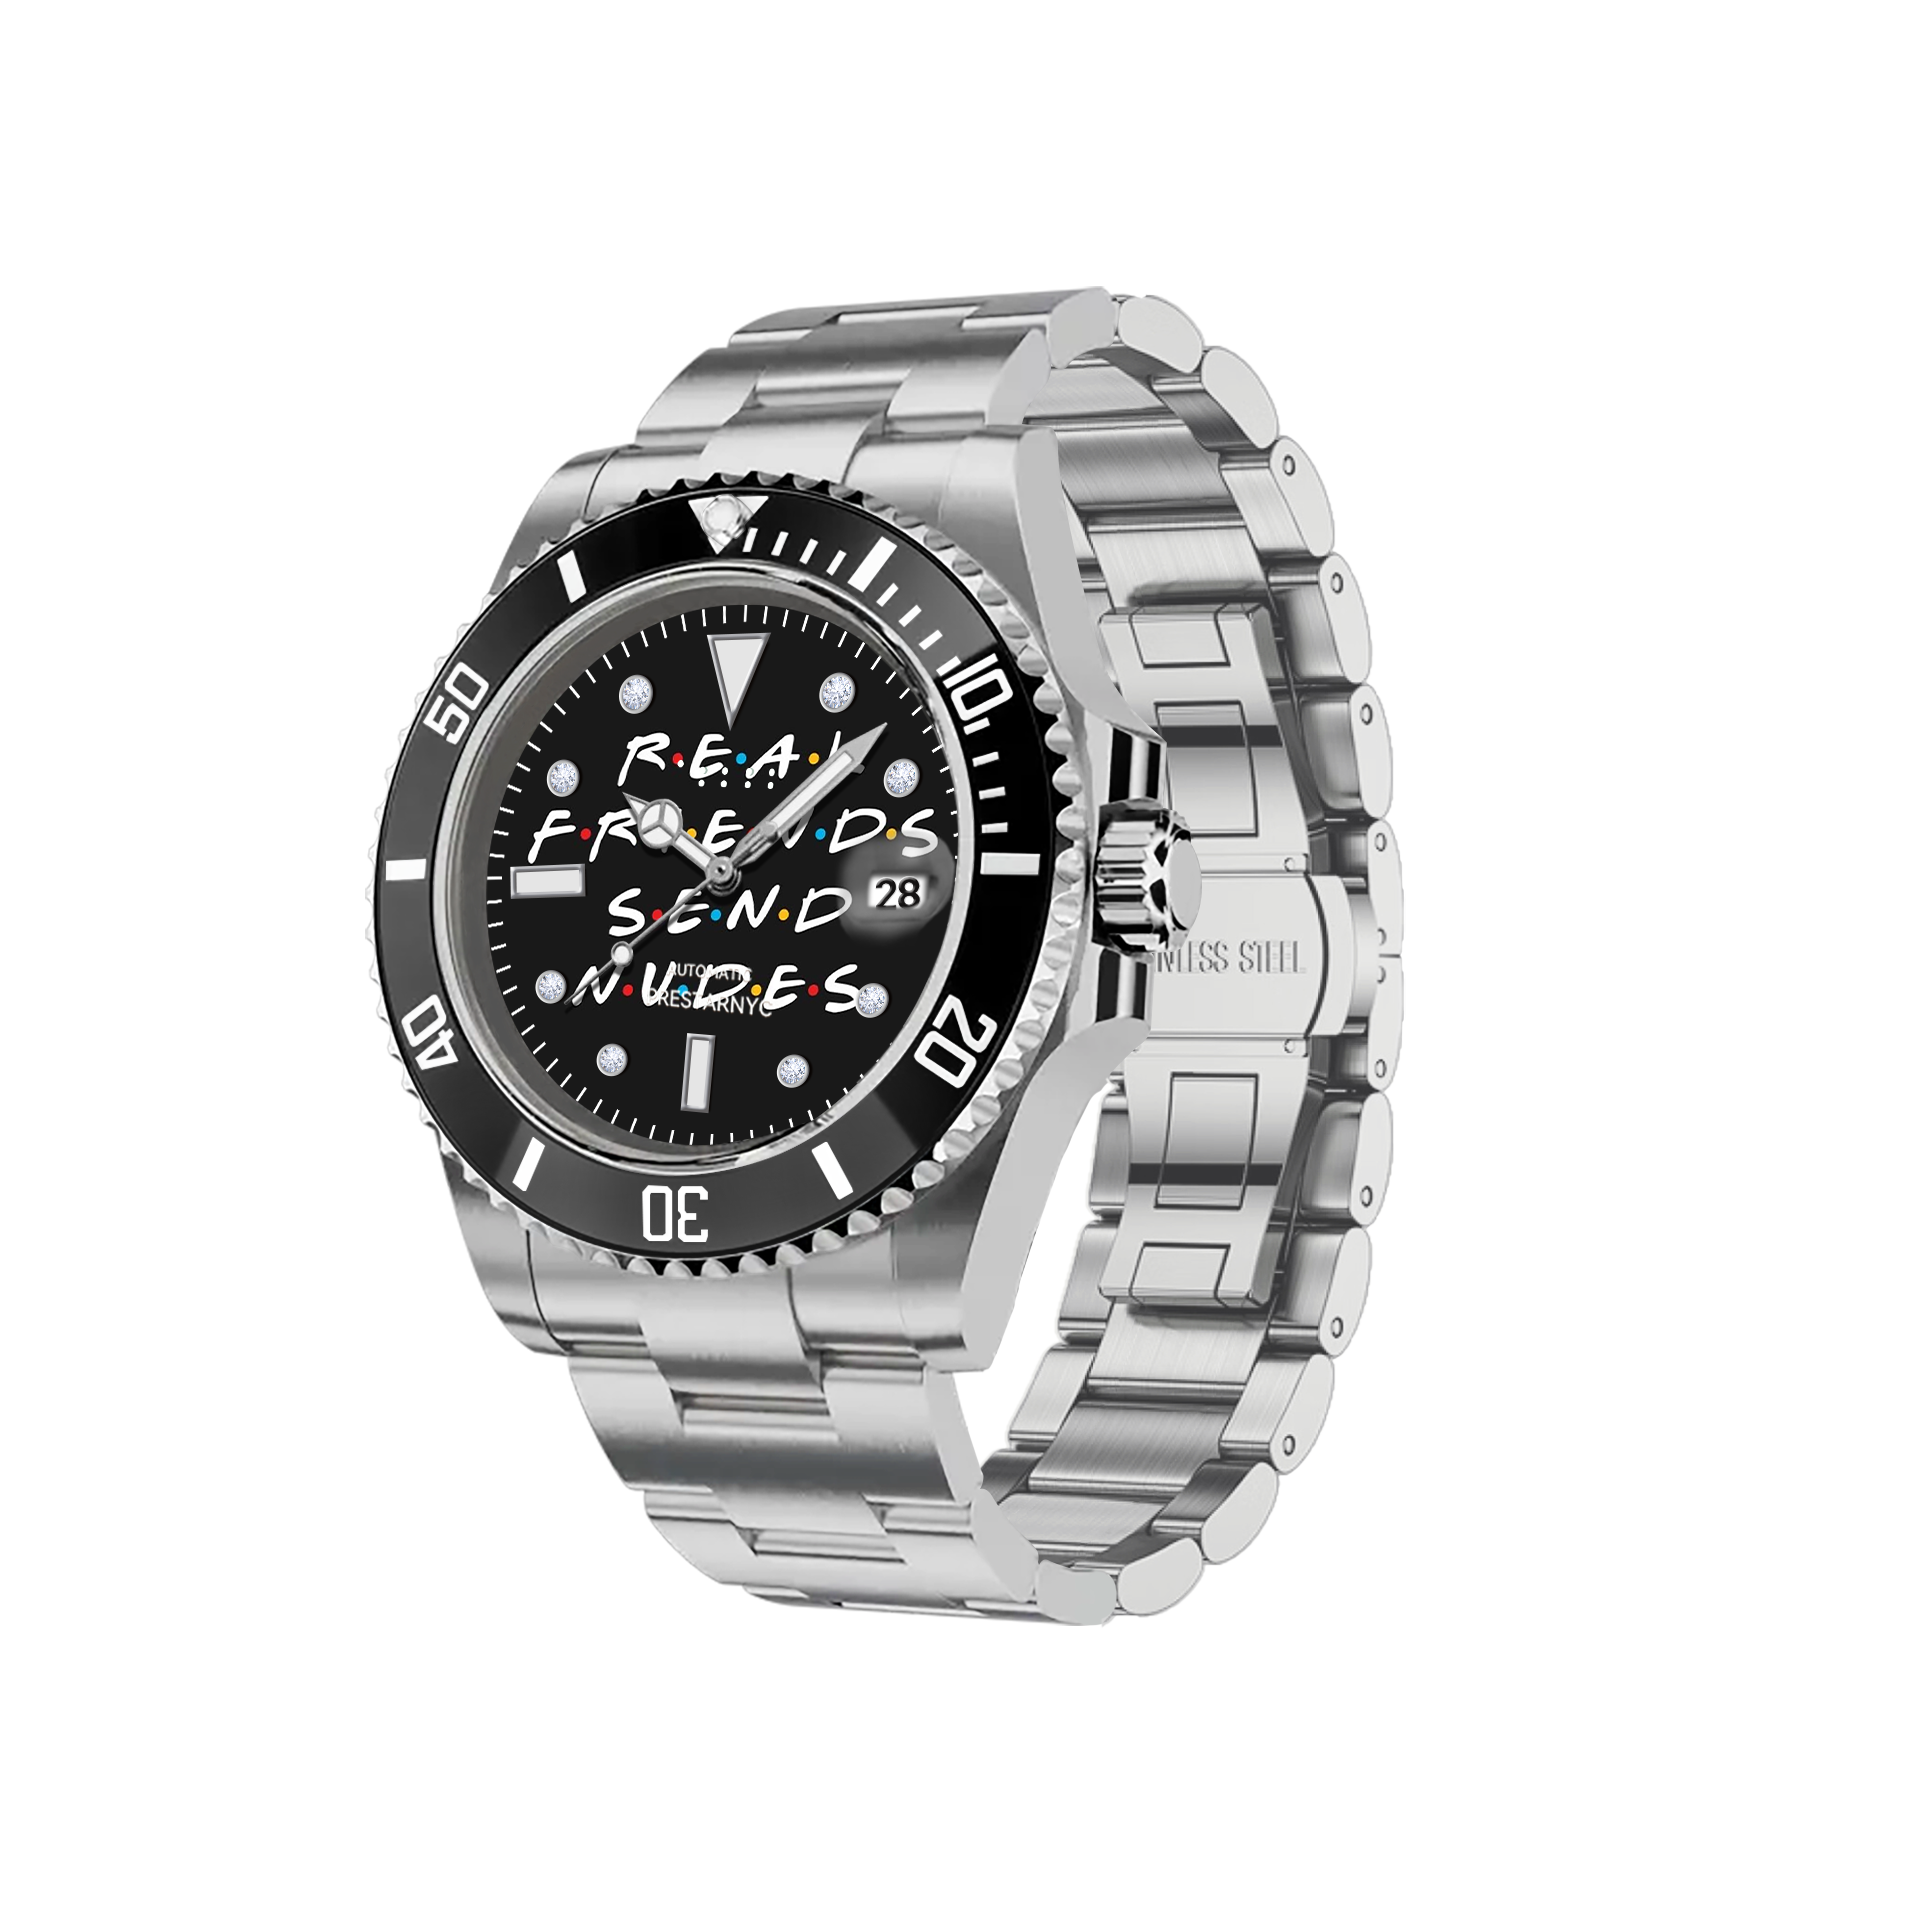 Prestar NYC Aquaman Initial Mechanical Watch (FRIENDS)